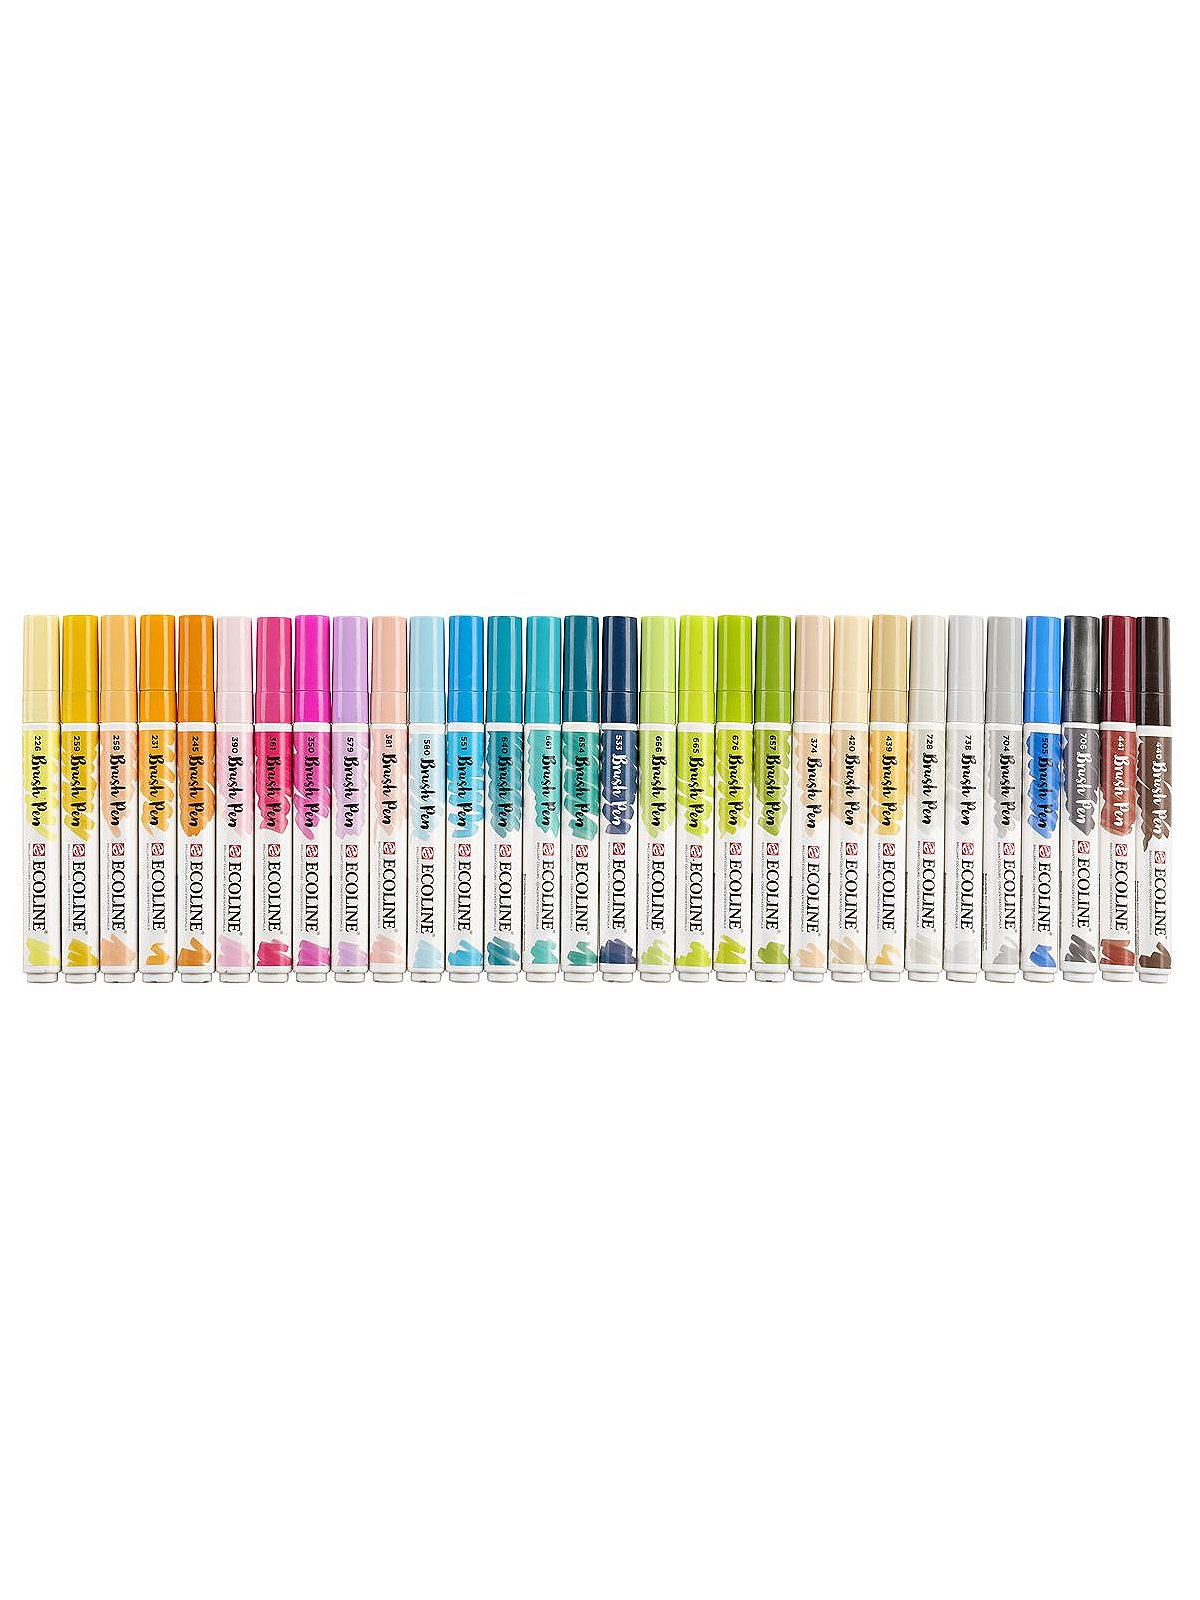 Royal Talens Ecoline Watercolor Brush Pens